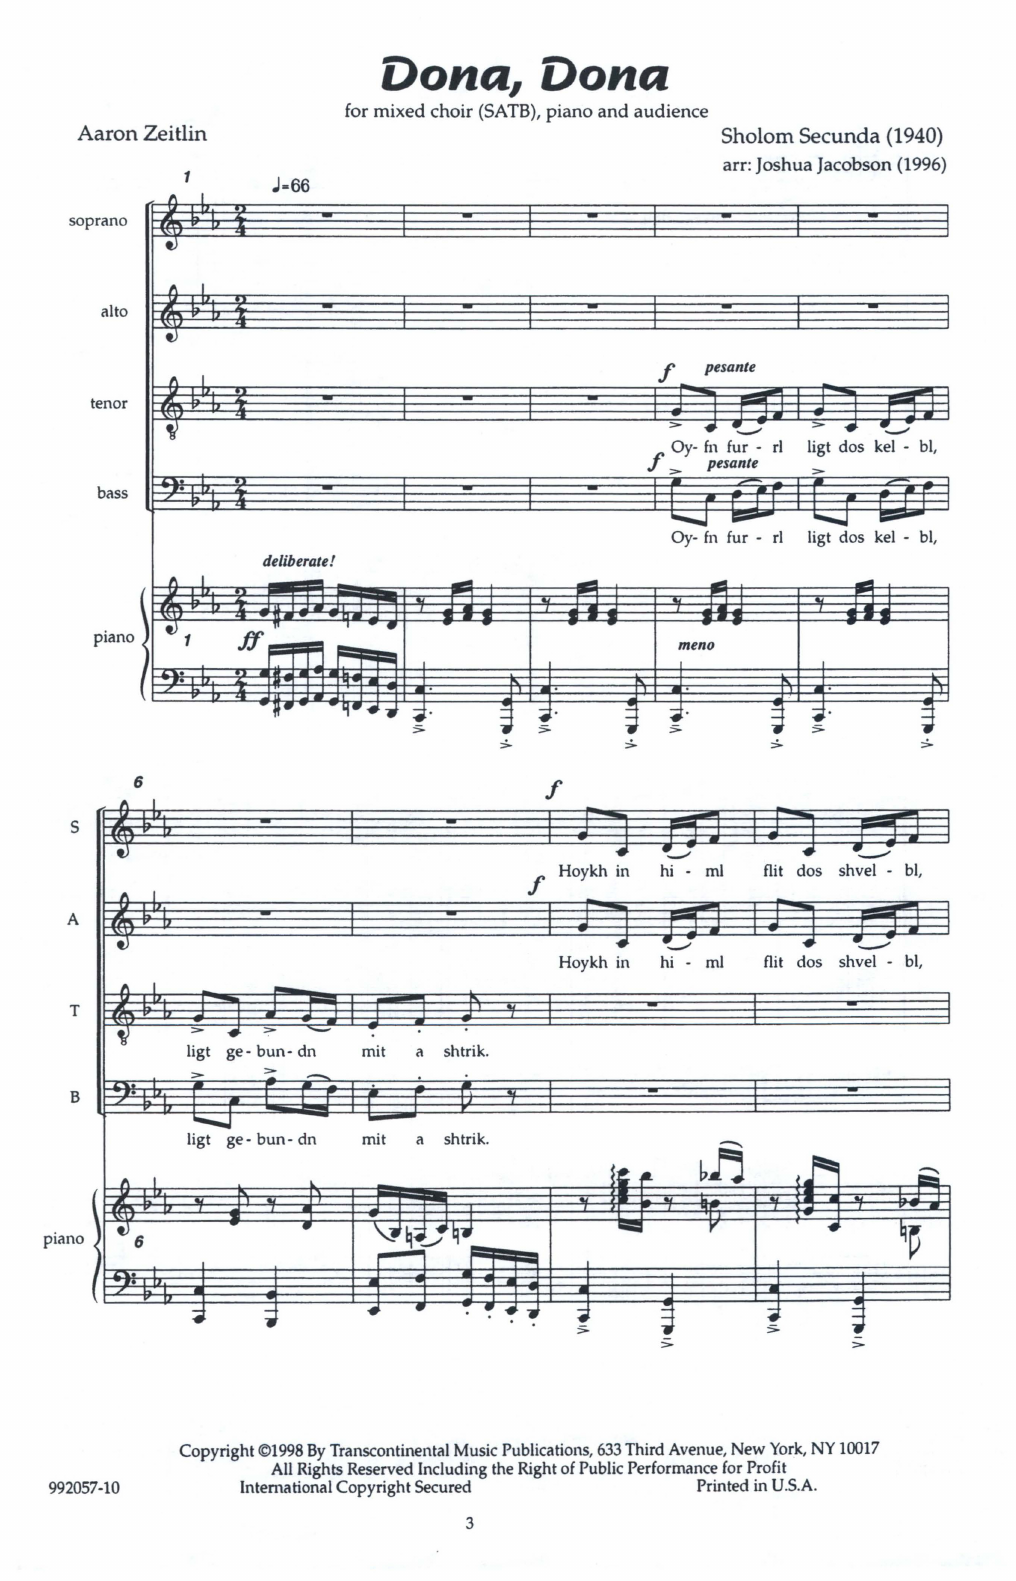 Sholom Secunda Dona, Dona (arr. Joshua Jacobson) sheet music notes and chords arranged for SATB Choir